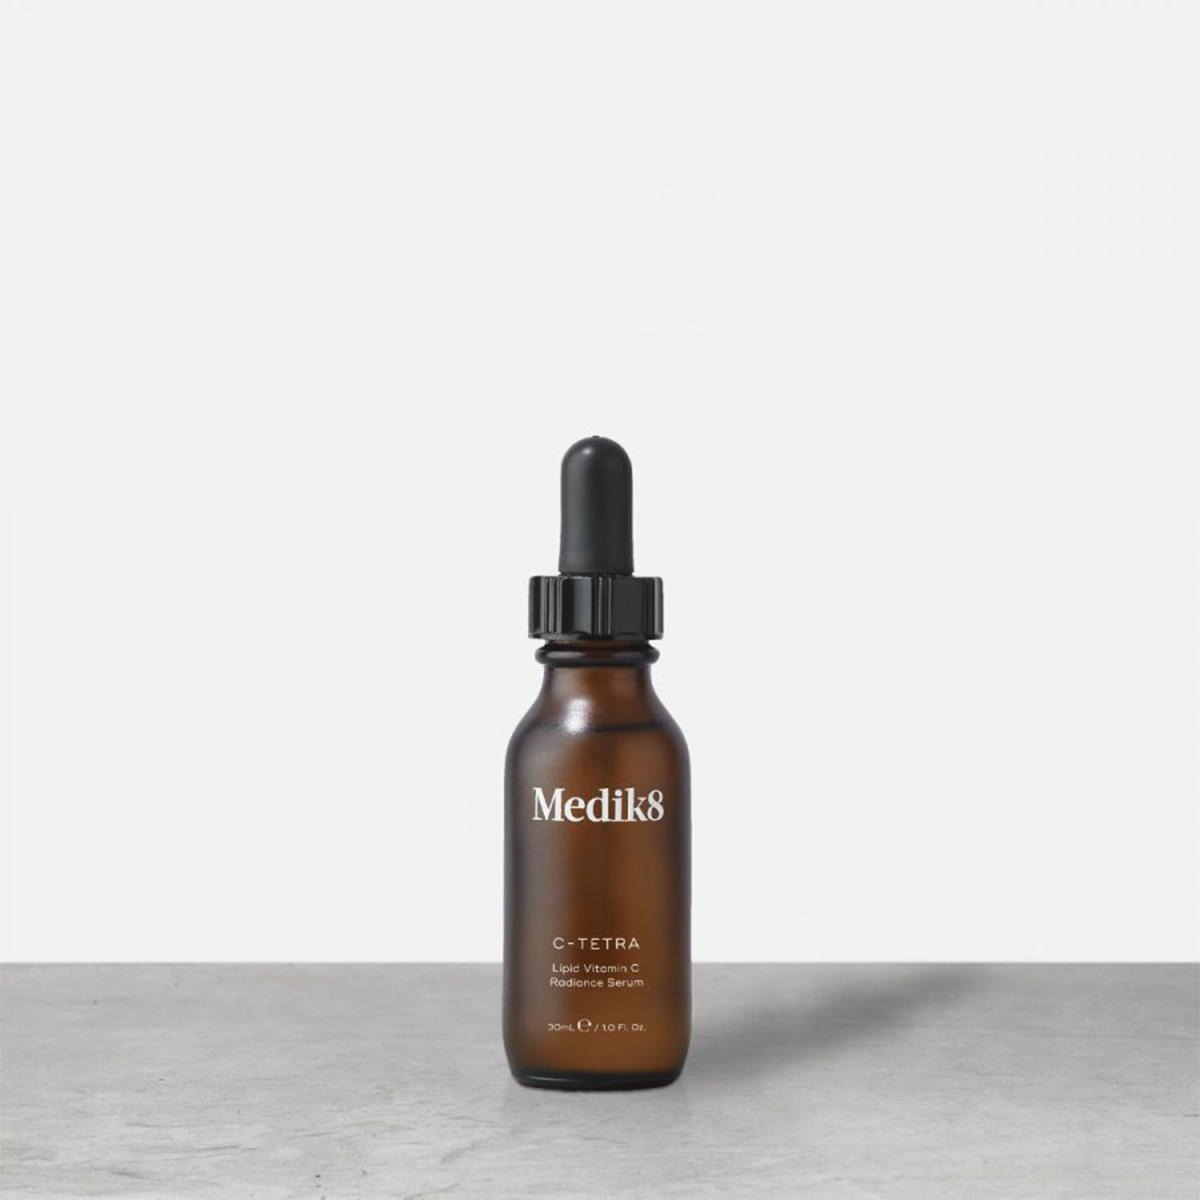 a bottle of medik8 serum